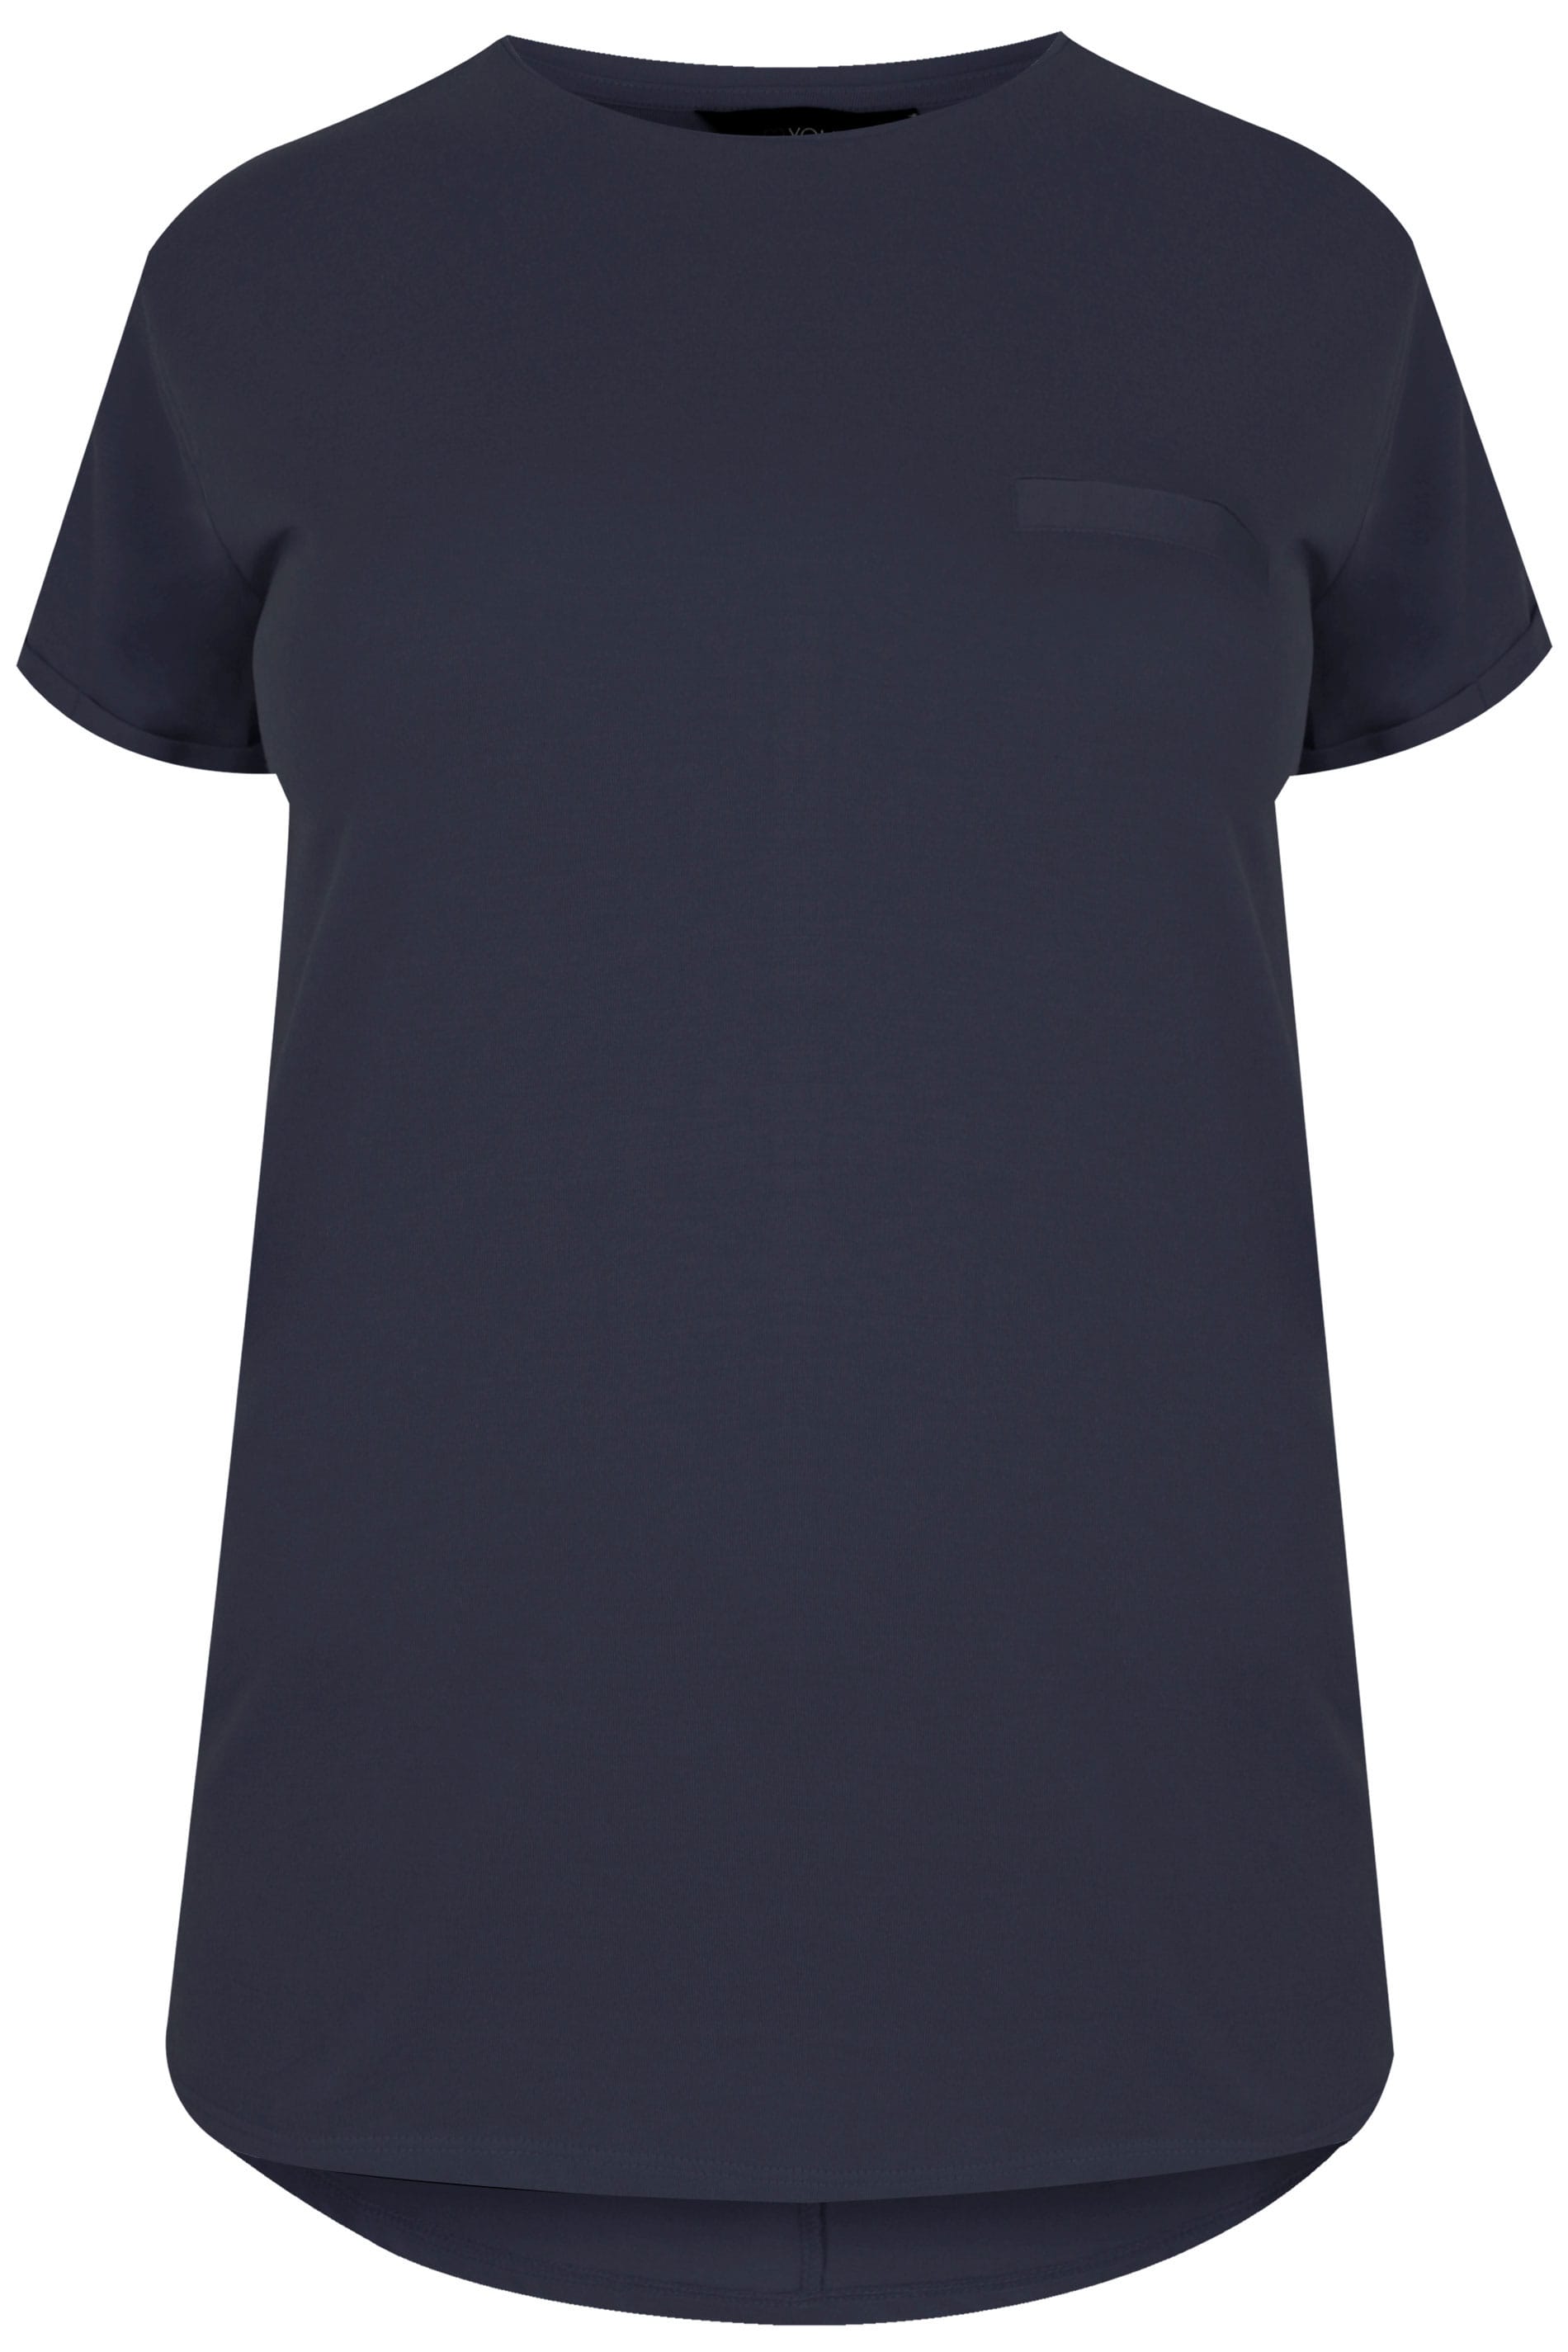 Download Navy Mock Pocket T-Shirt, plus size 16 to 36